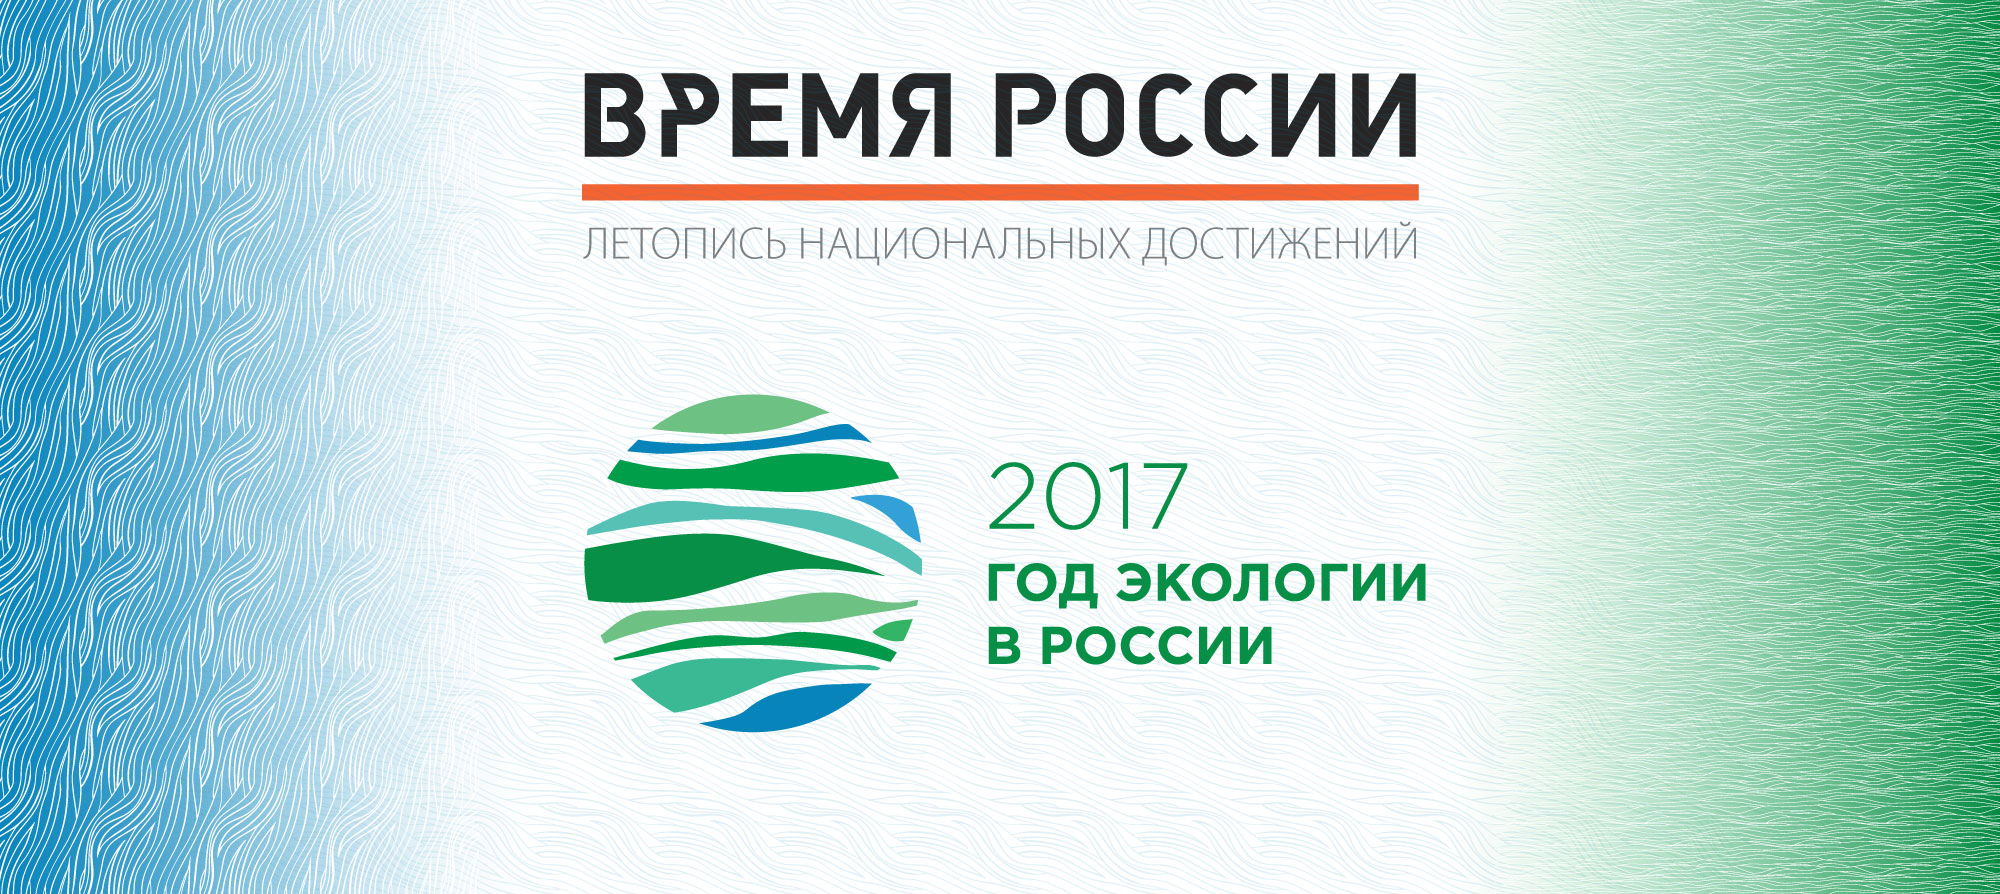 Году экологии 2017. Логотип год экологии в Горном 2022. Год экологии в России 2017 логотип.